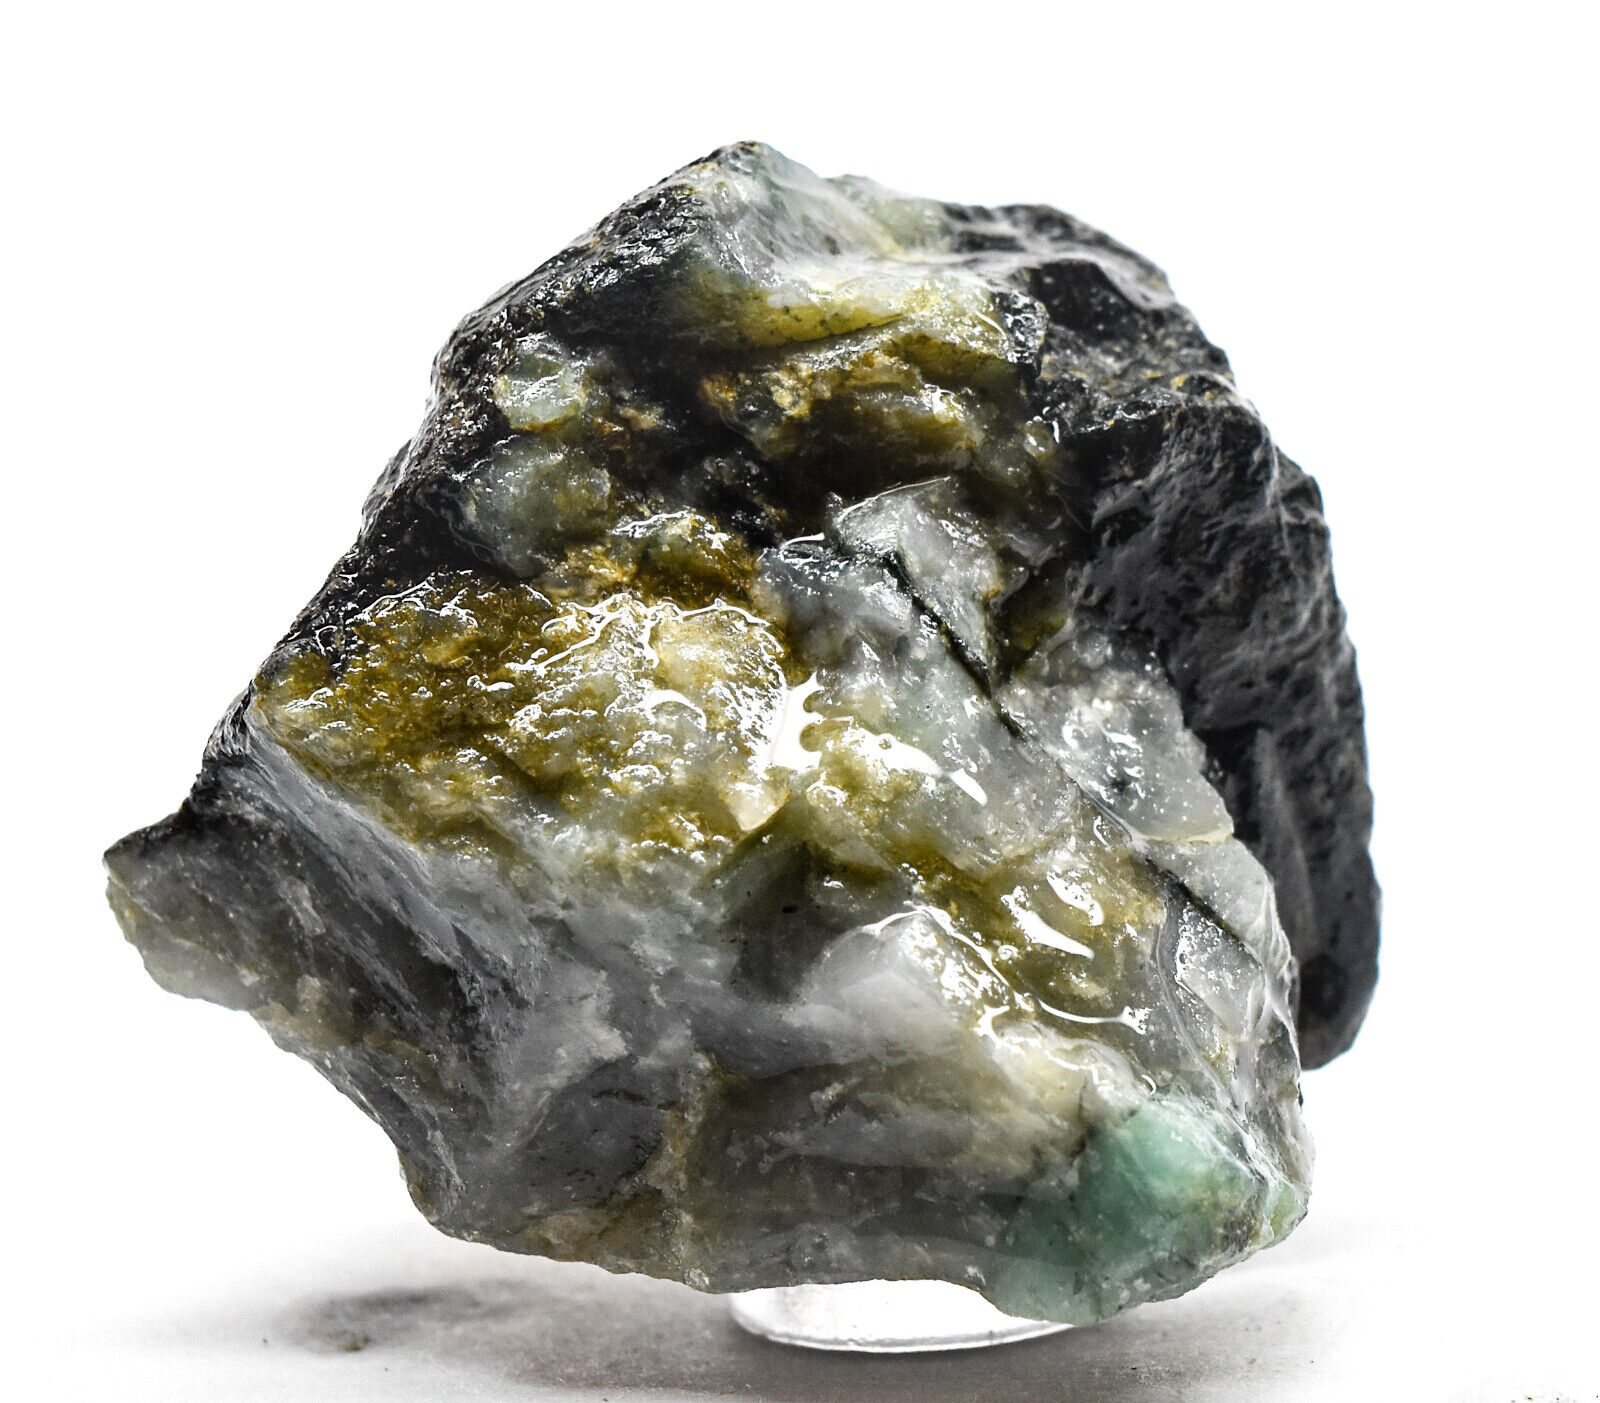 85g Green Yellow Beryl in Matrix Rough Natural Heliodor Emerald Crystal - Brazil